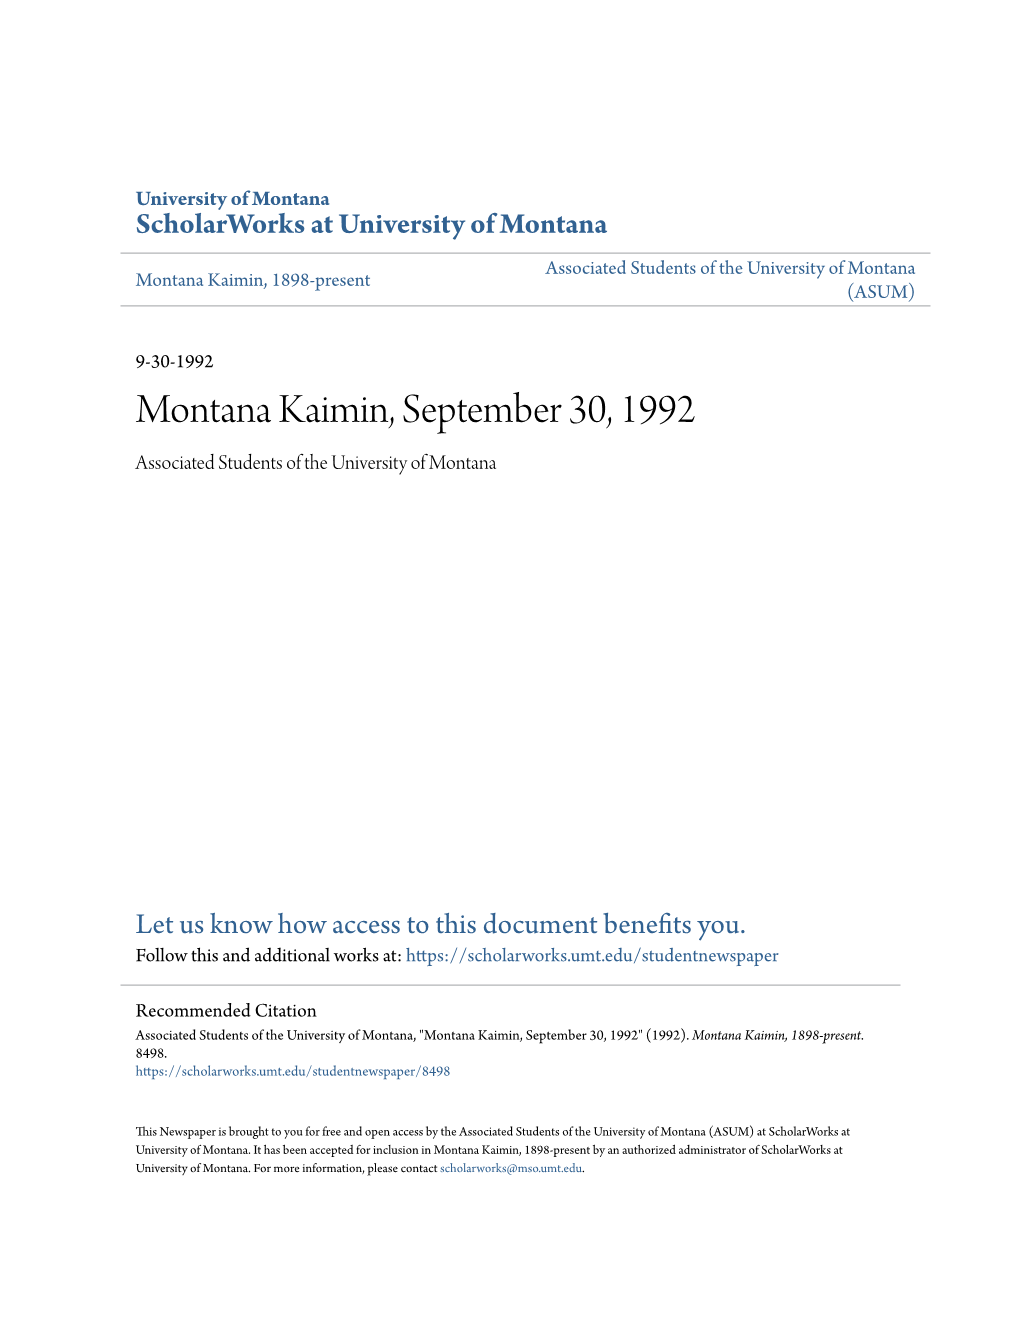 Montana Kaimin, September 30, 1992 Associated Students of the University of Montana